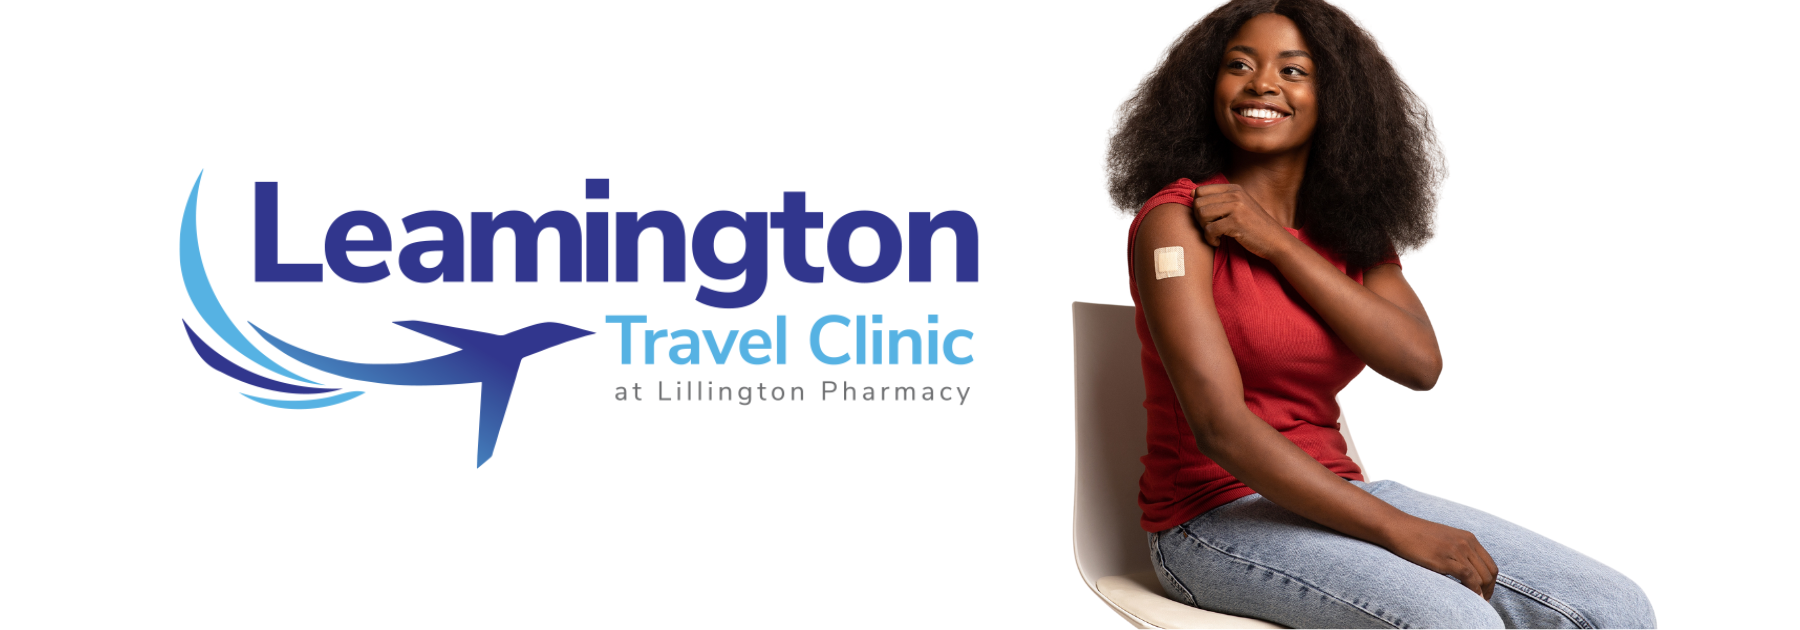 travel clinic leamington spa